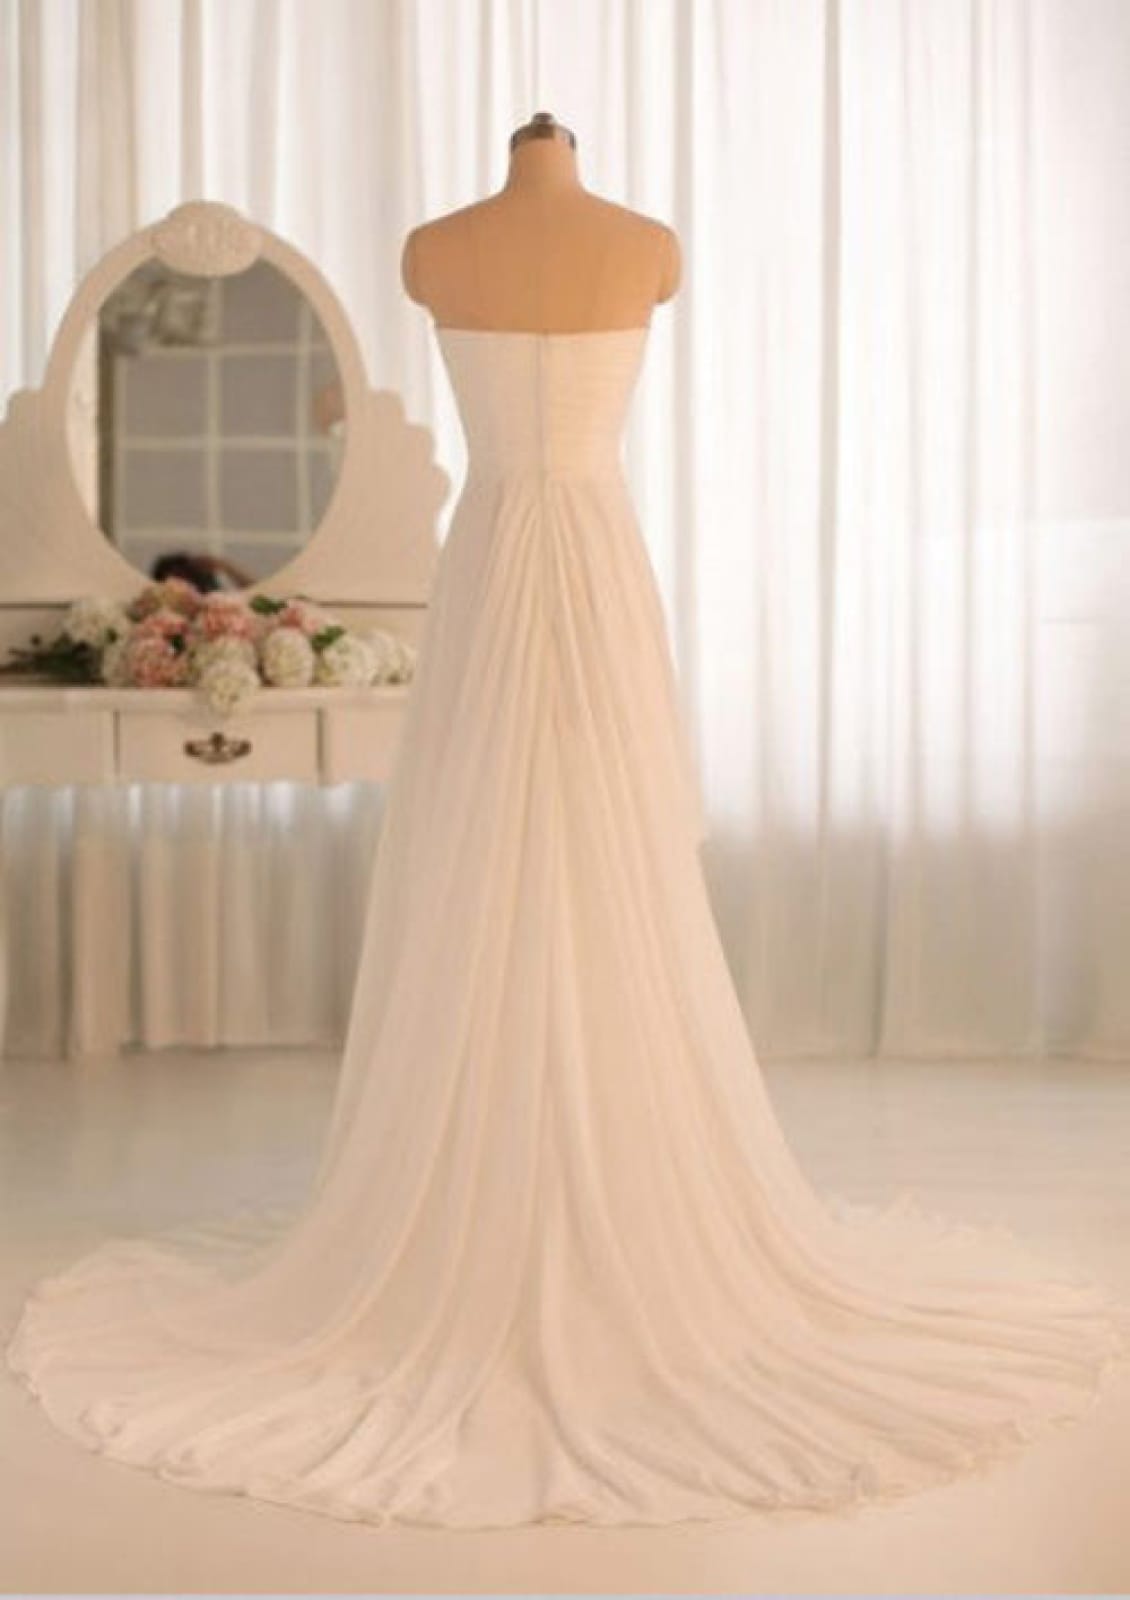 Ivory Strapless Knot Draped A-line Chiffon Bridal Gown Wedding Dress